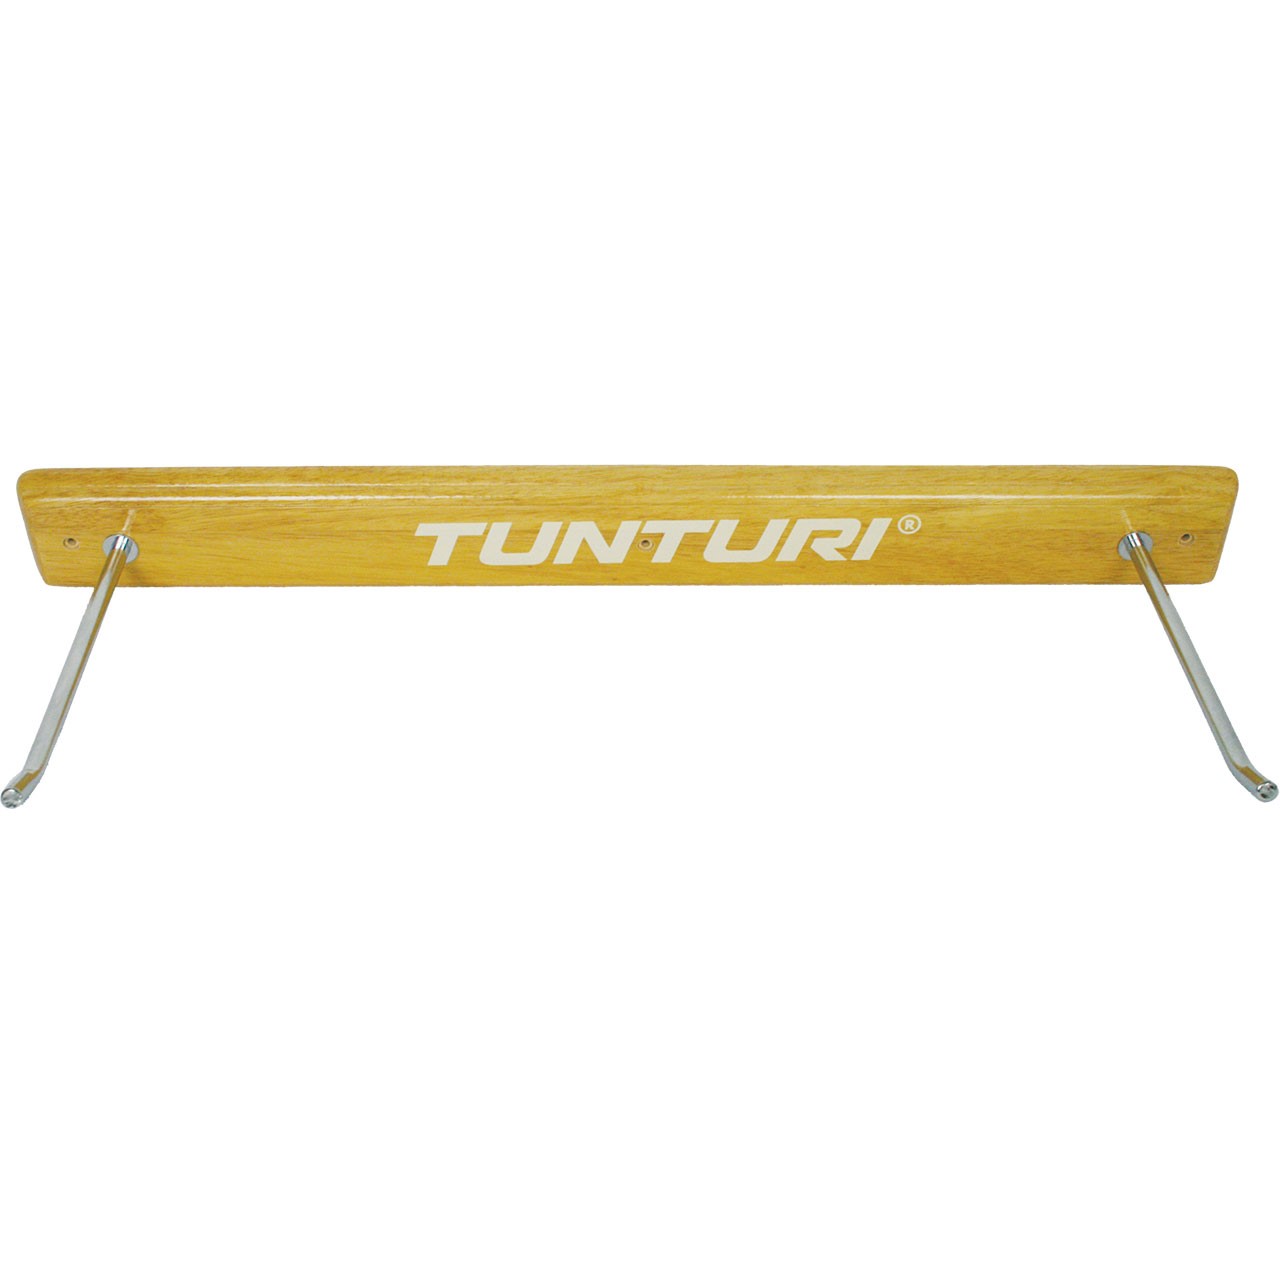 Aufhänge Bügel für Tunturi TPE Profi Fitness Matten